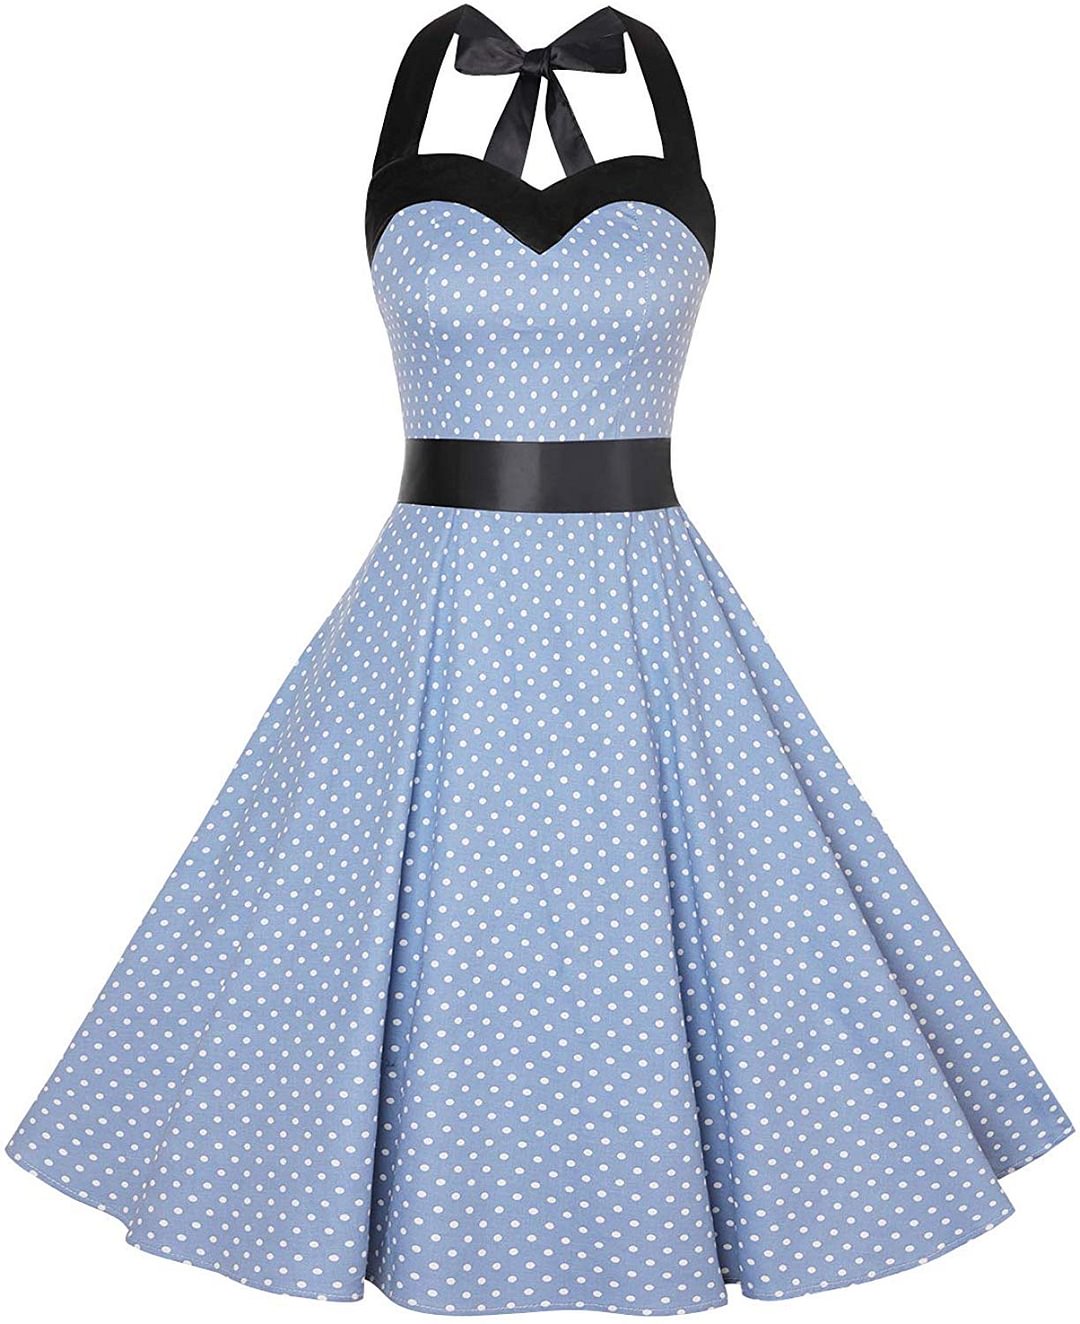 Women's Vintage Polka Dot Halter Dress 1950s Floral Sping Retro Rockabilly Cocktail Swing Tea Dresses